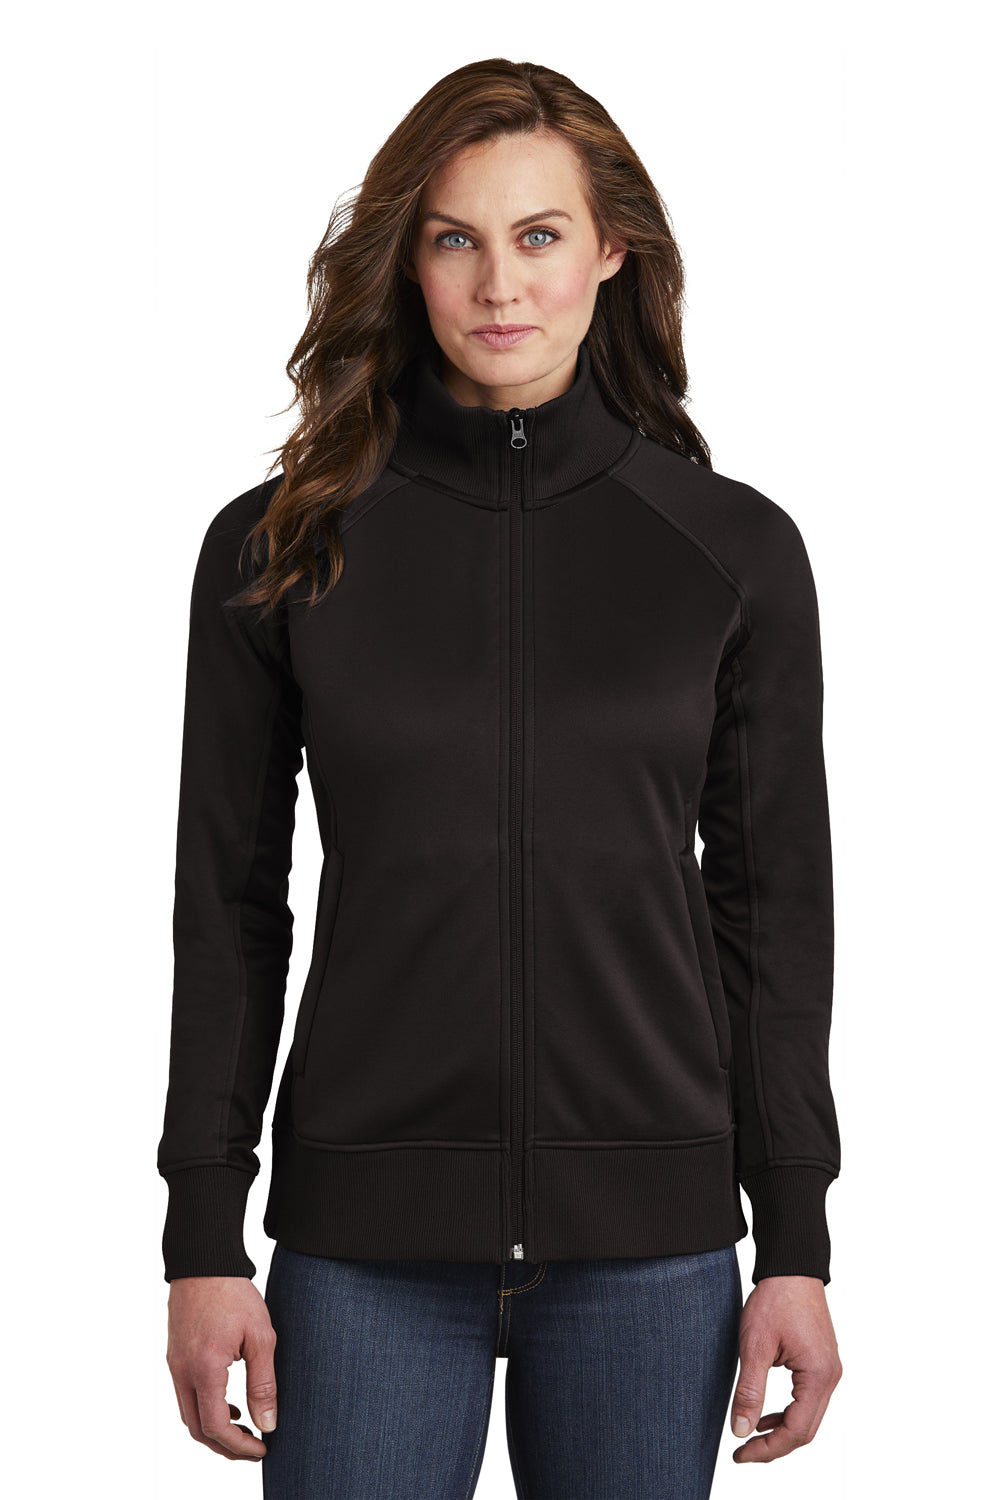 The North Face Womens Tech Full Zip Fleece Jacket - Black - Closeout